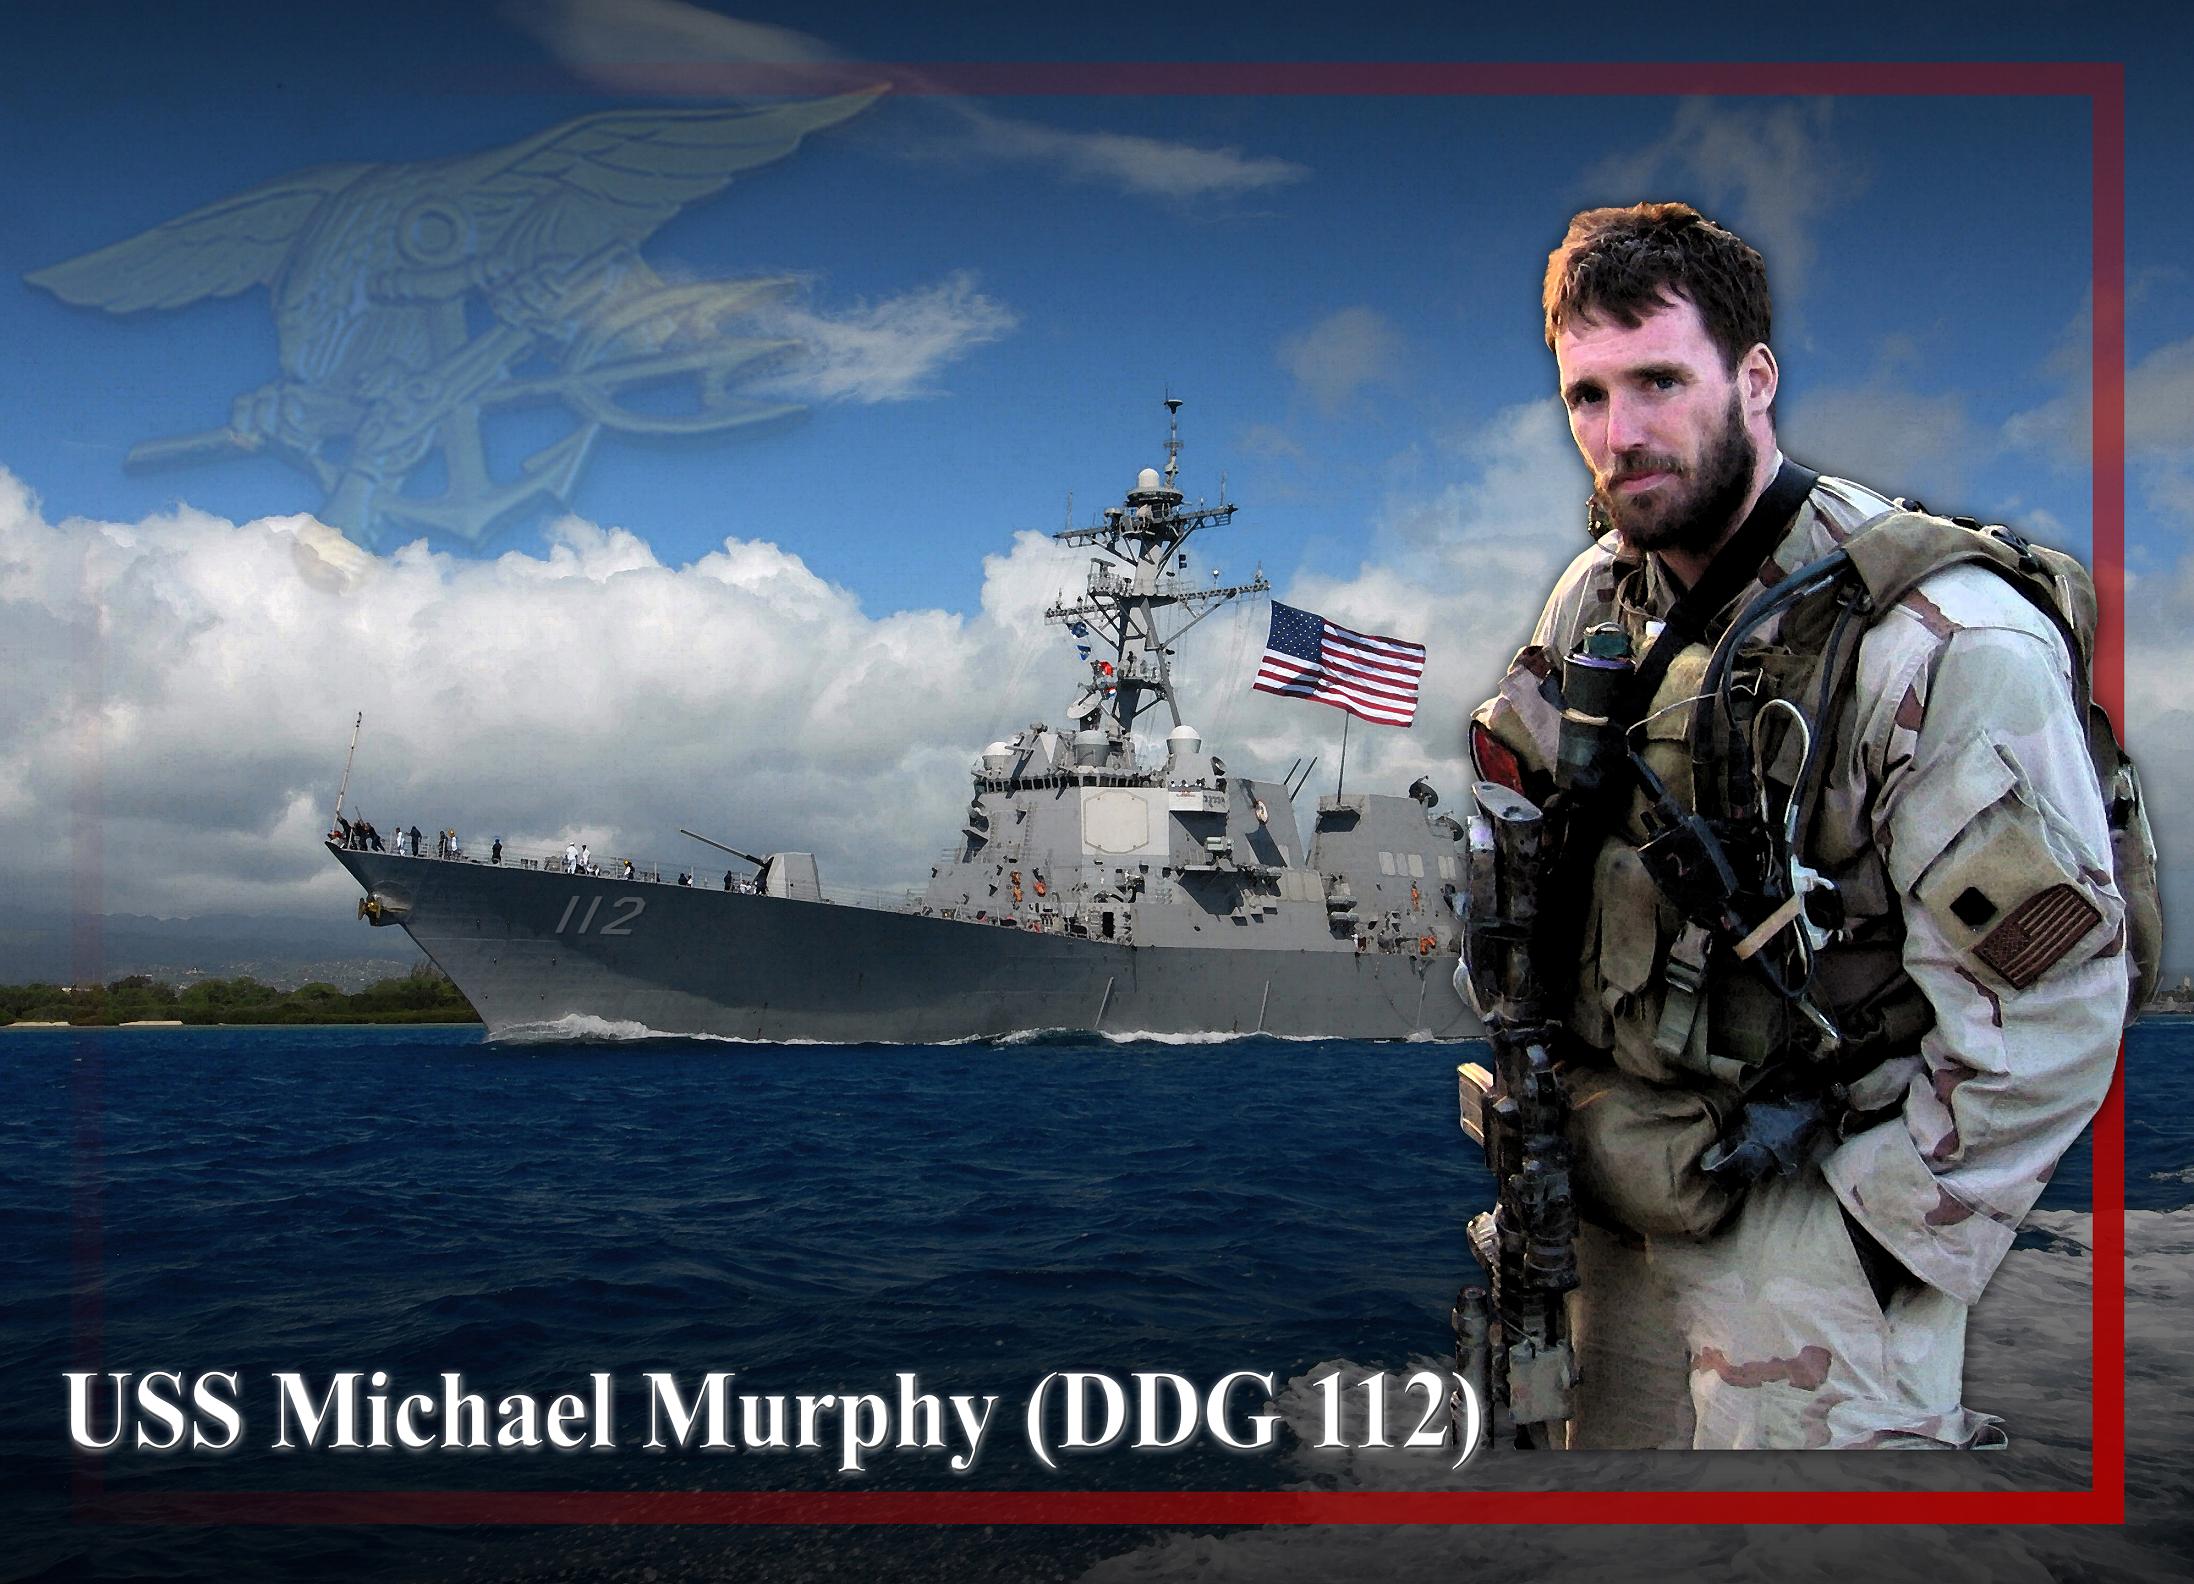 USS_Michael_Murphy_(DDG_112)_photo_illustration.jpg